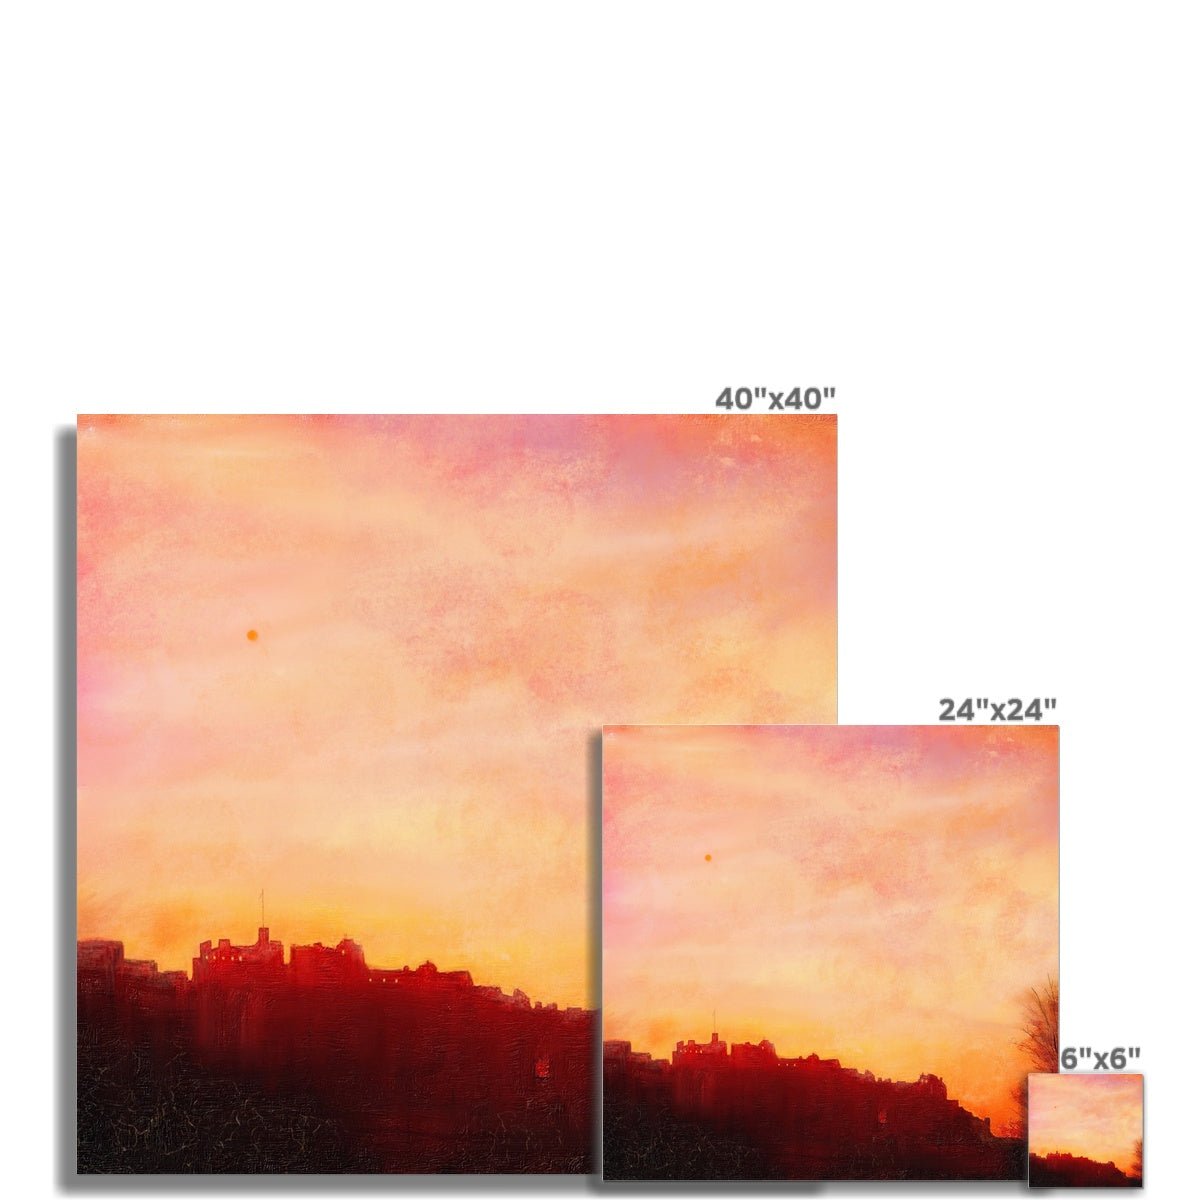 Edinburgh Castle Sunset Painting | Fine Art Prints From Scotland-Unframed Prints-Edinburgh & Glasgow Art Gallery-Paintings, Prints, Homeware, Art Gifts From Scotland By Scottish Artist Kevin Hunter